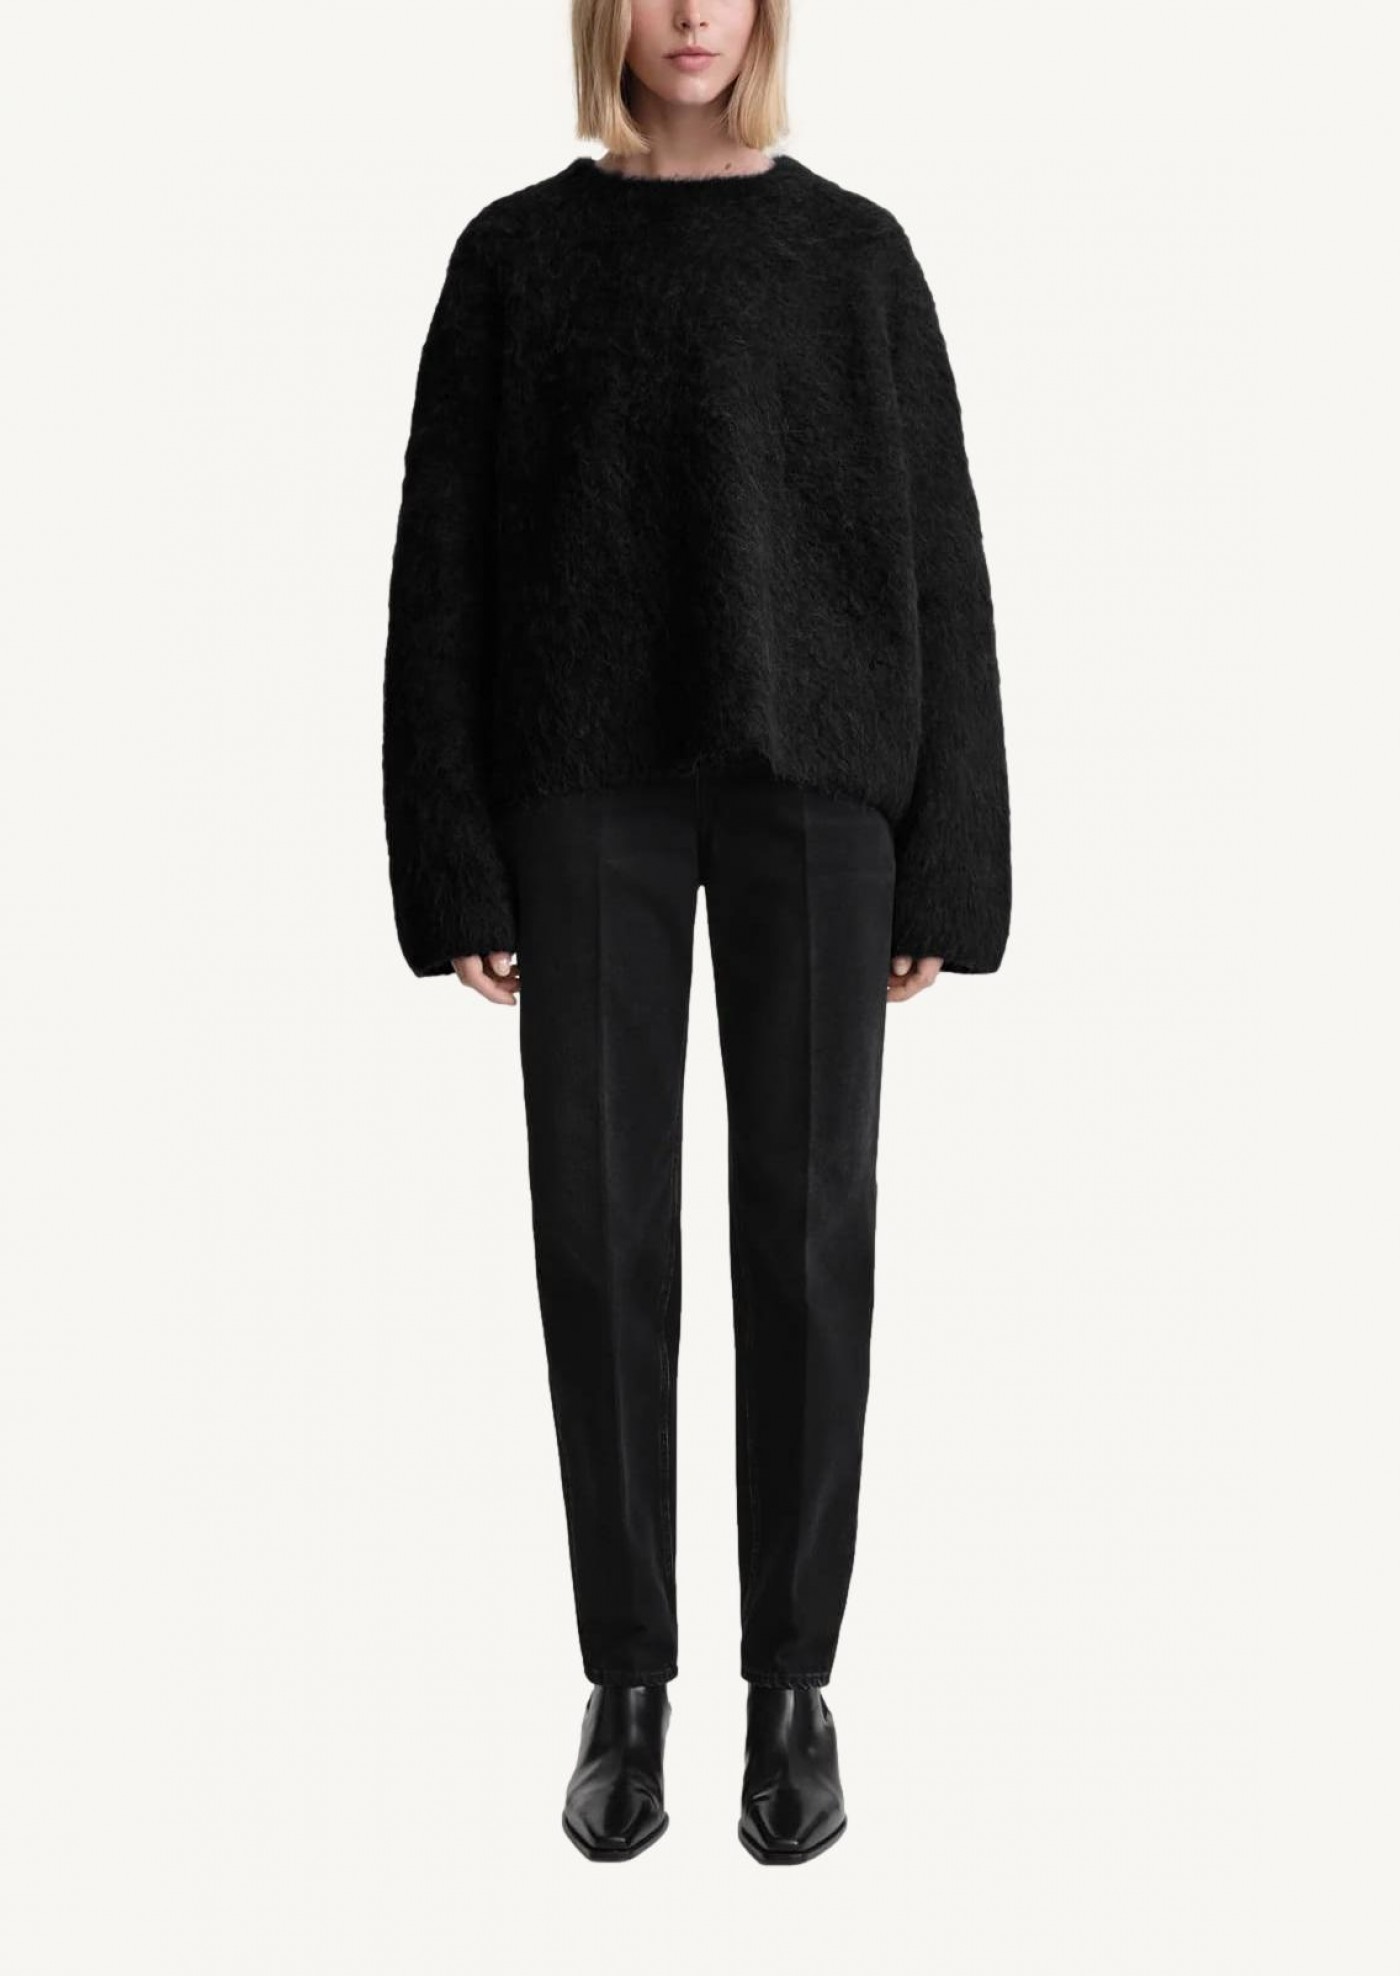 Boxy alpaca knit black